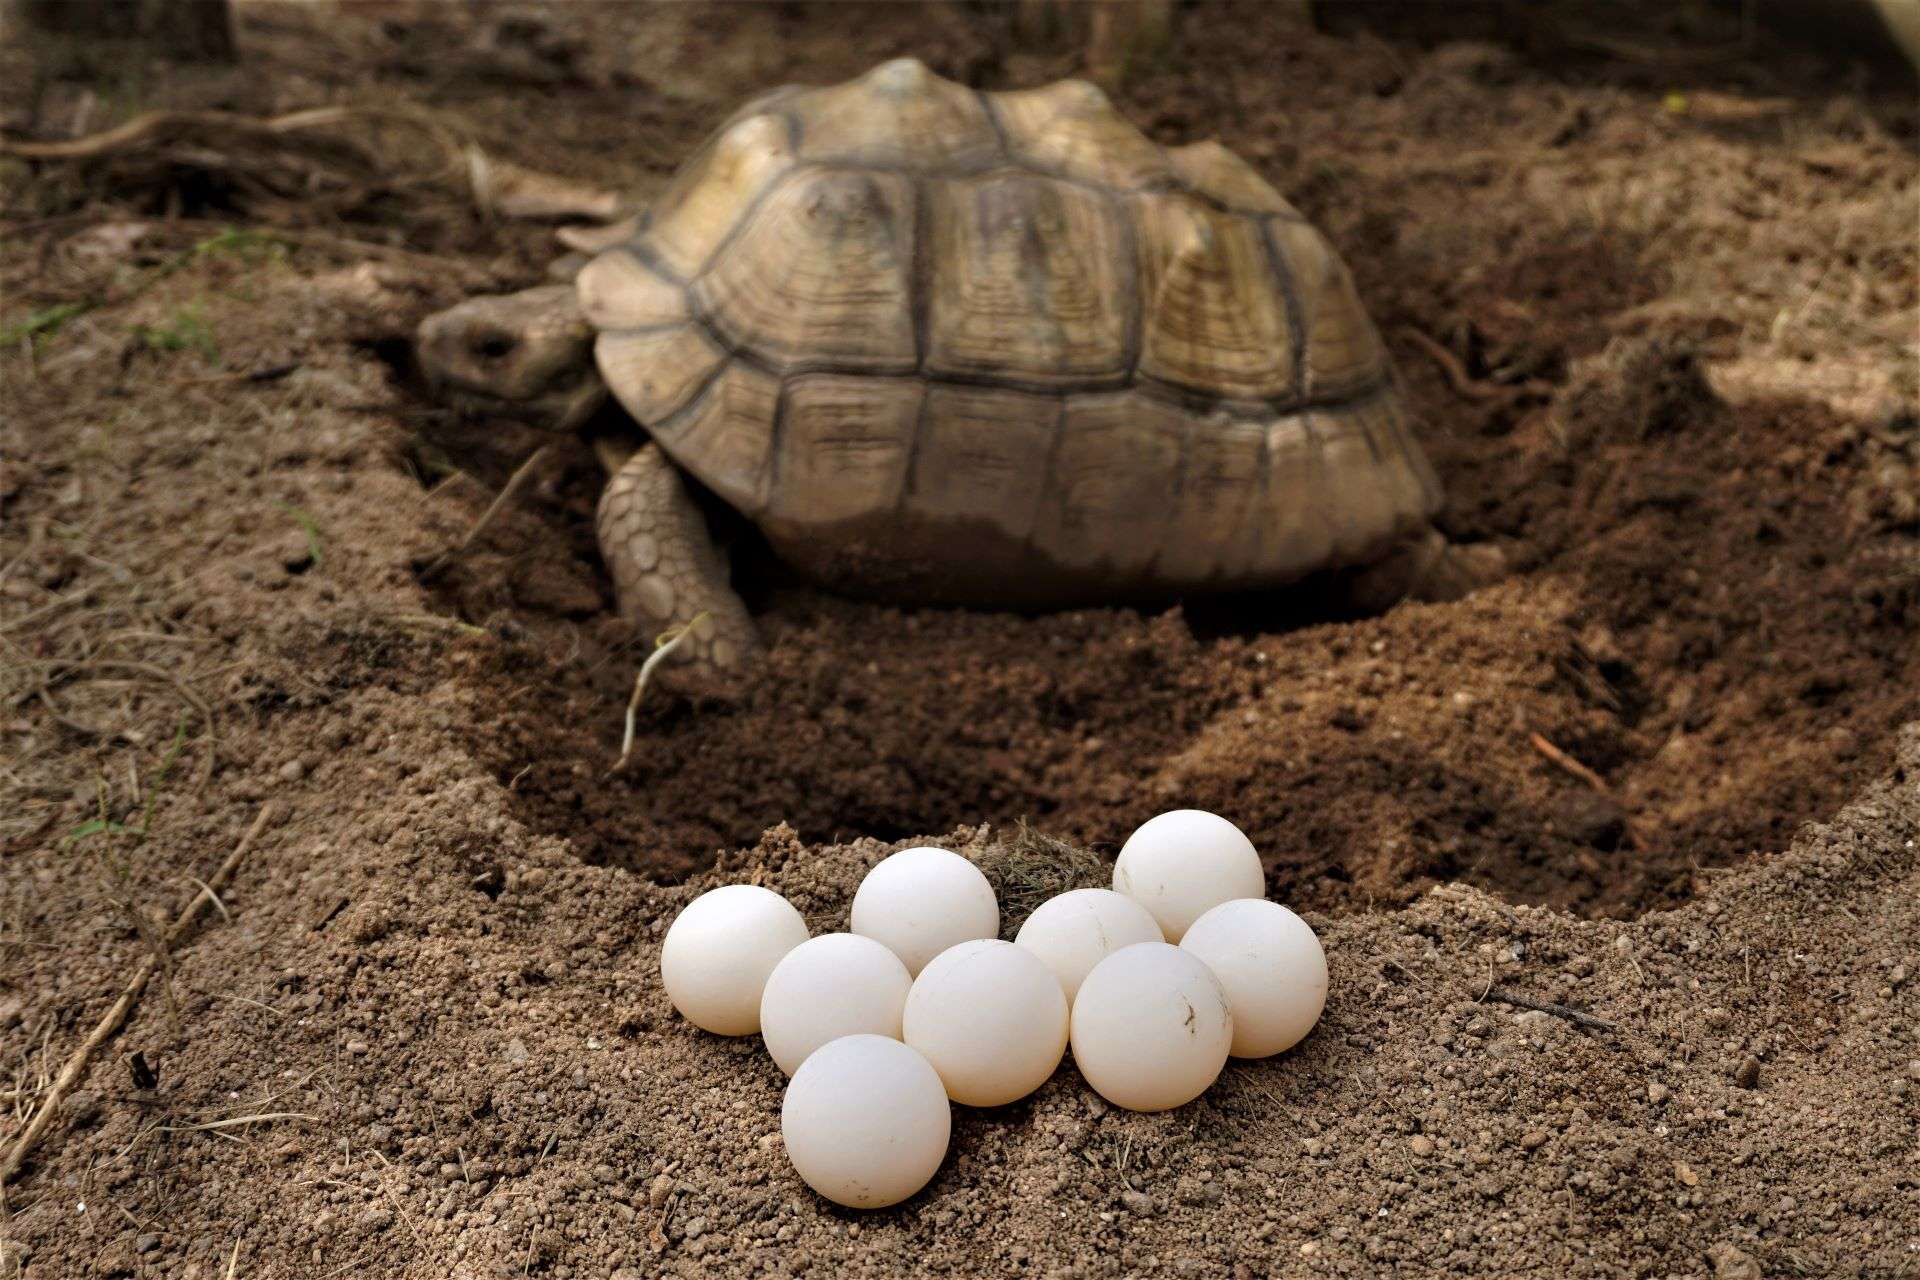 Tortoise Nesting and Egg Laying, Female tortoise laying eggs.